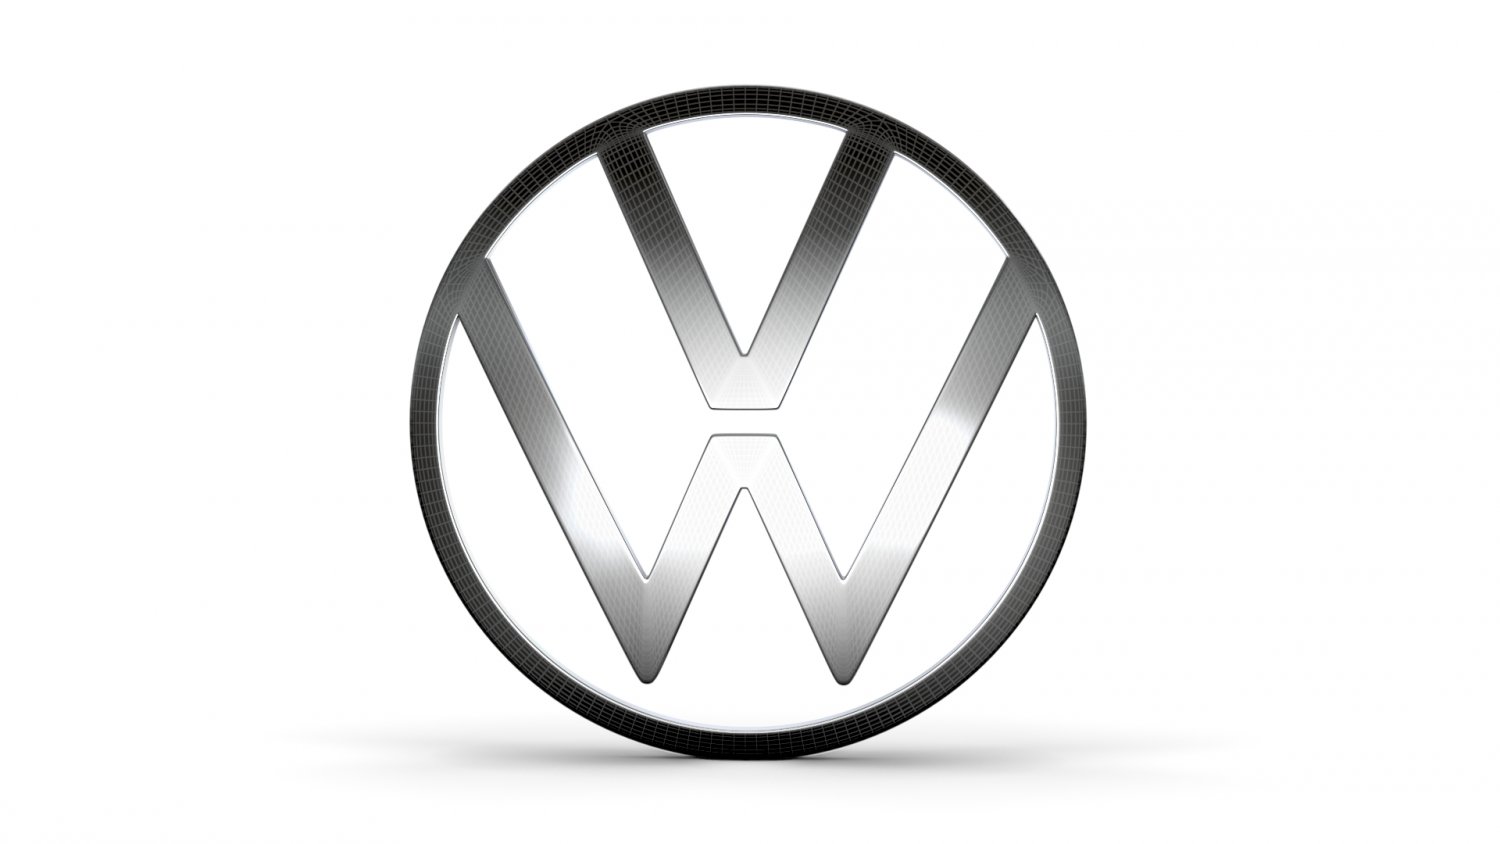 7,409 Volkswagen Logo Images, Stock Photos, 3D objects, & Vectors